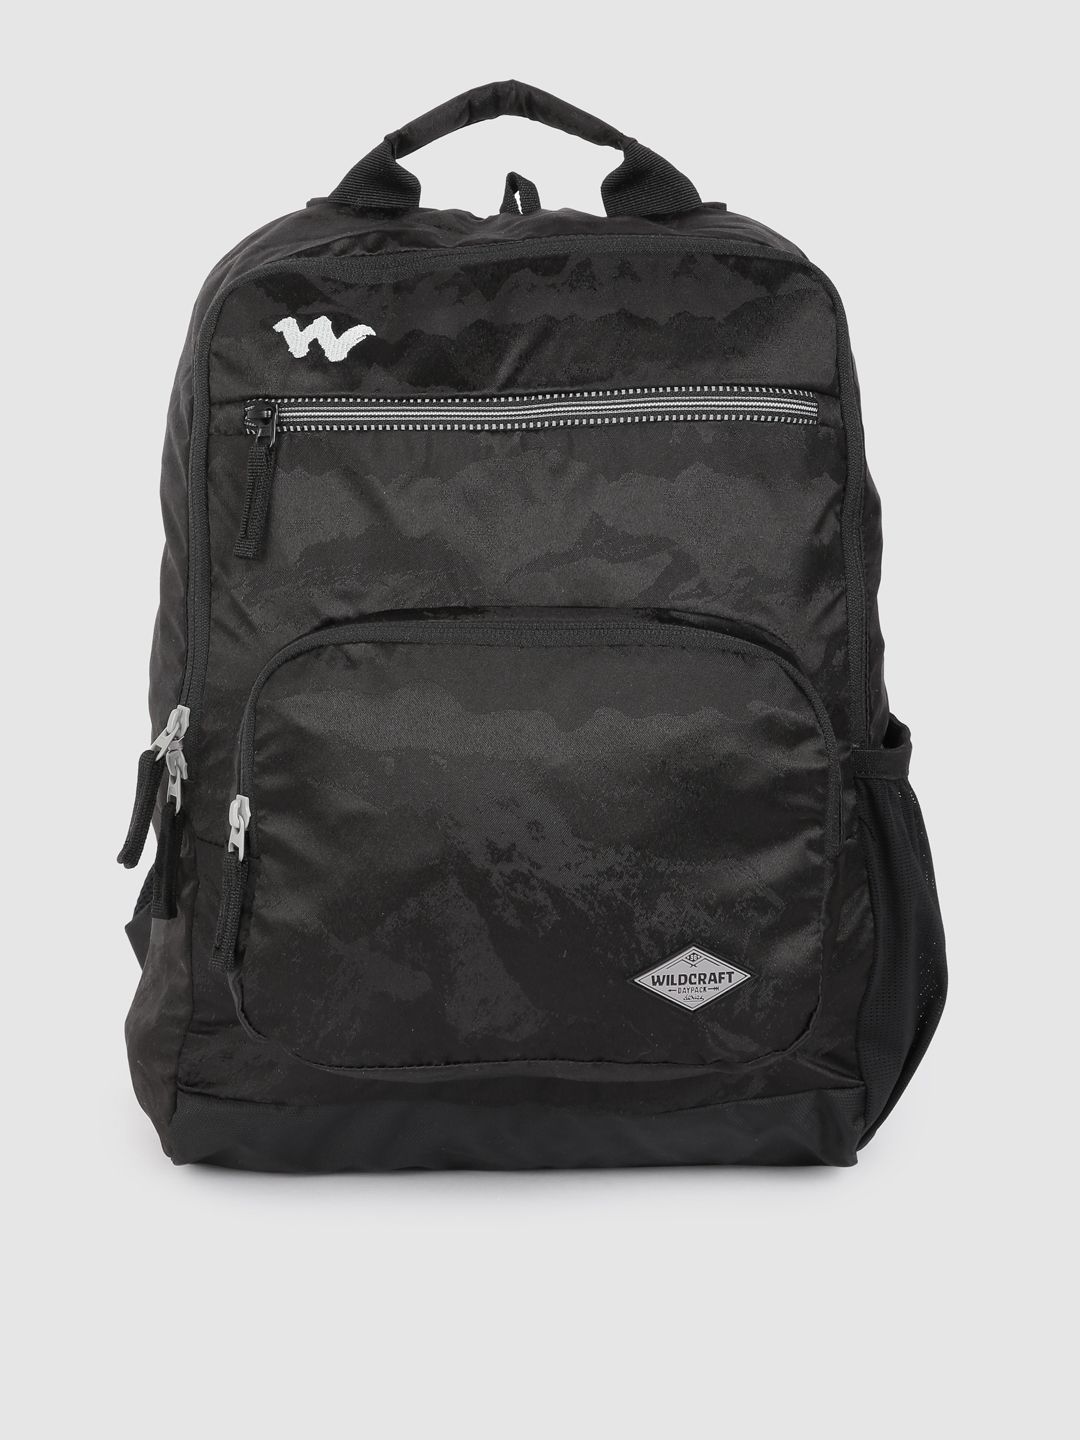 Wildcraft Unisex Black Evo Solid Backpack Price in India